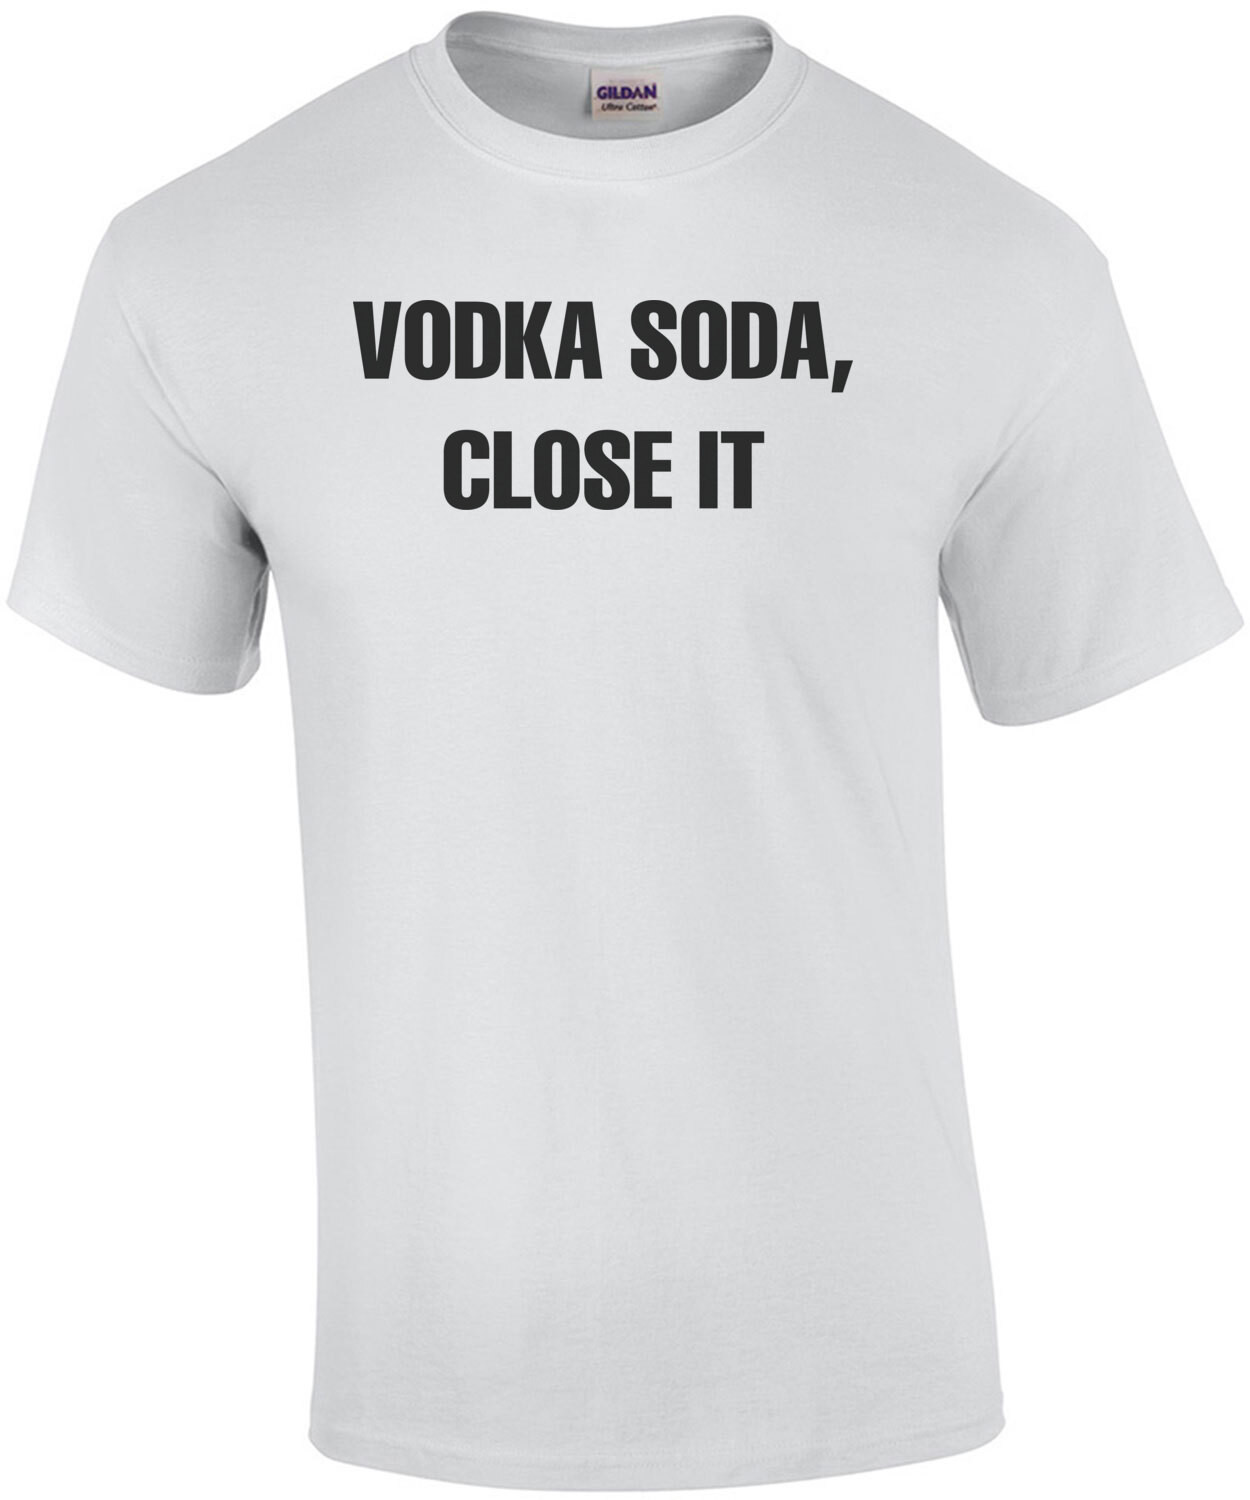 Vodka Soda, Close It. Funny Drinking Shirt